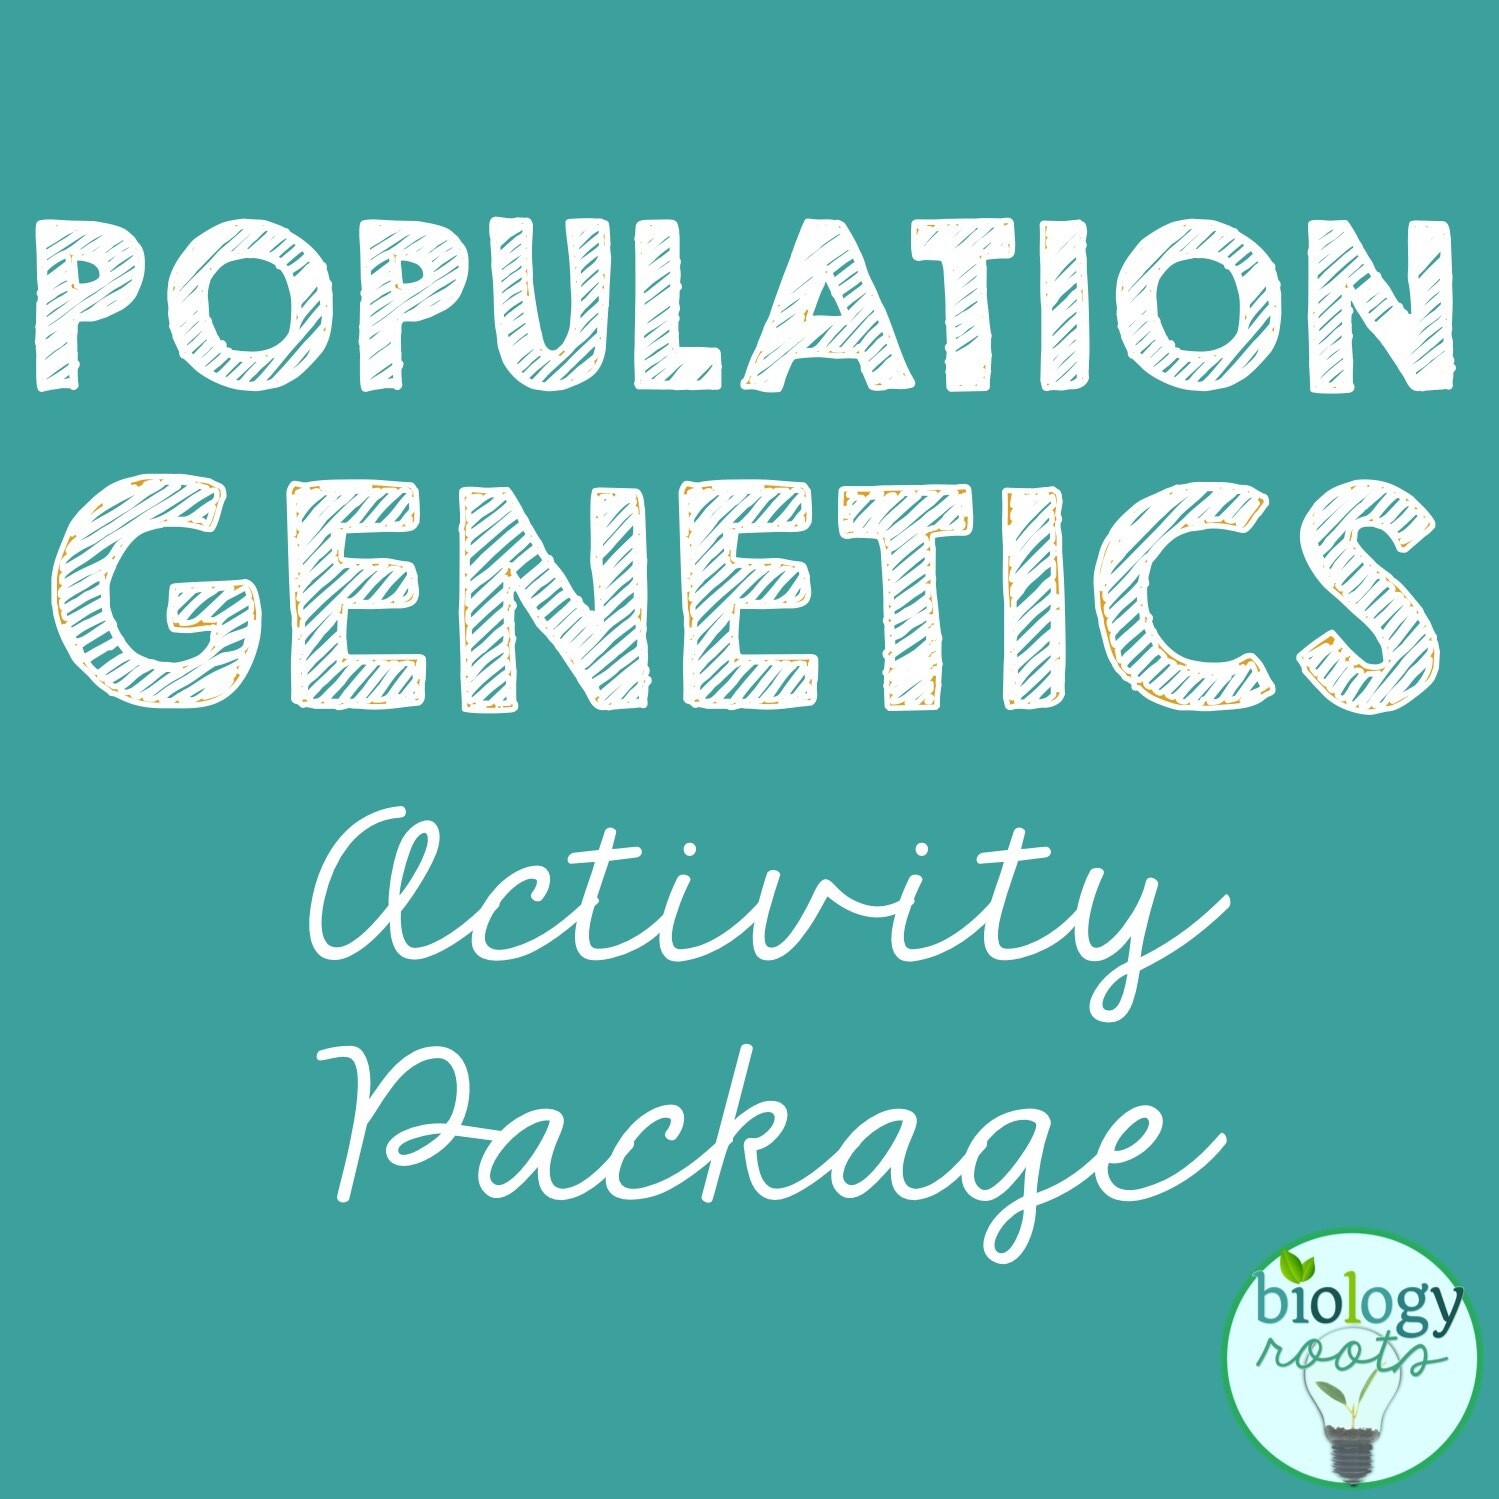 Population Genetics Activity Package